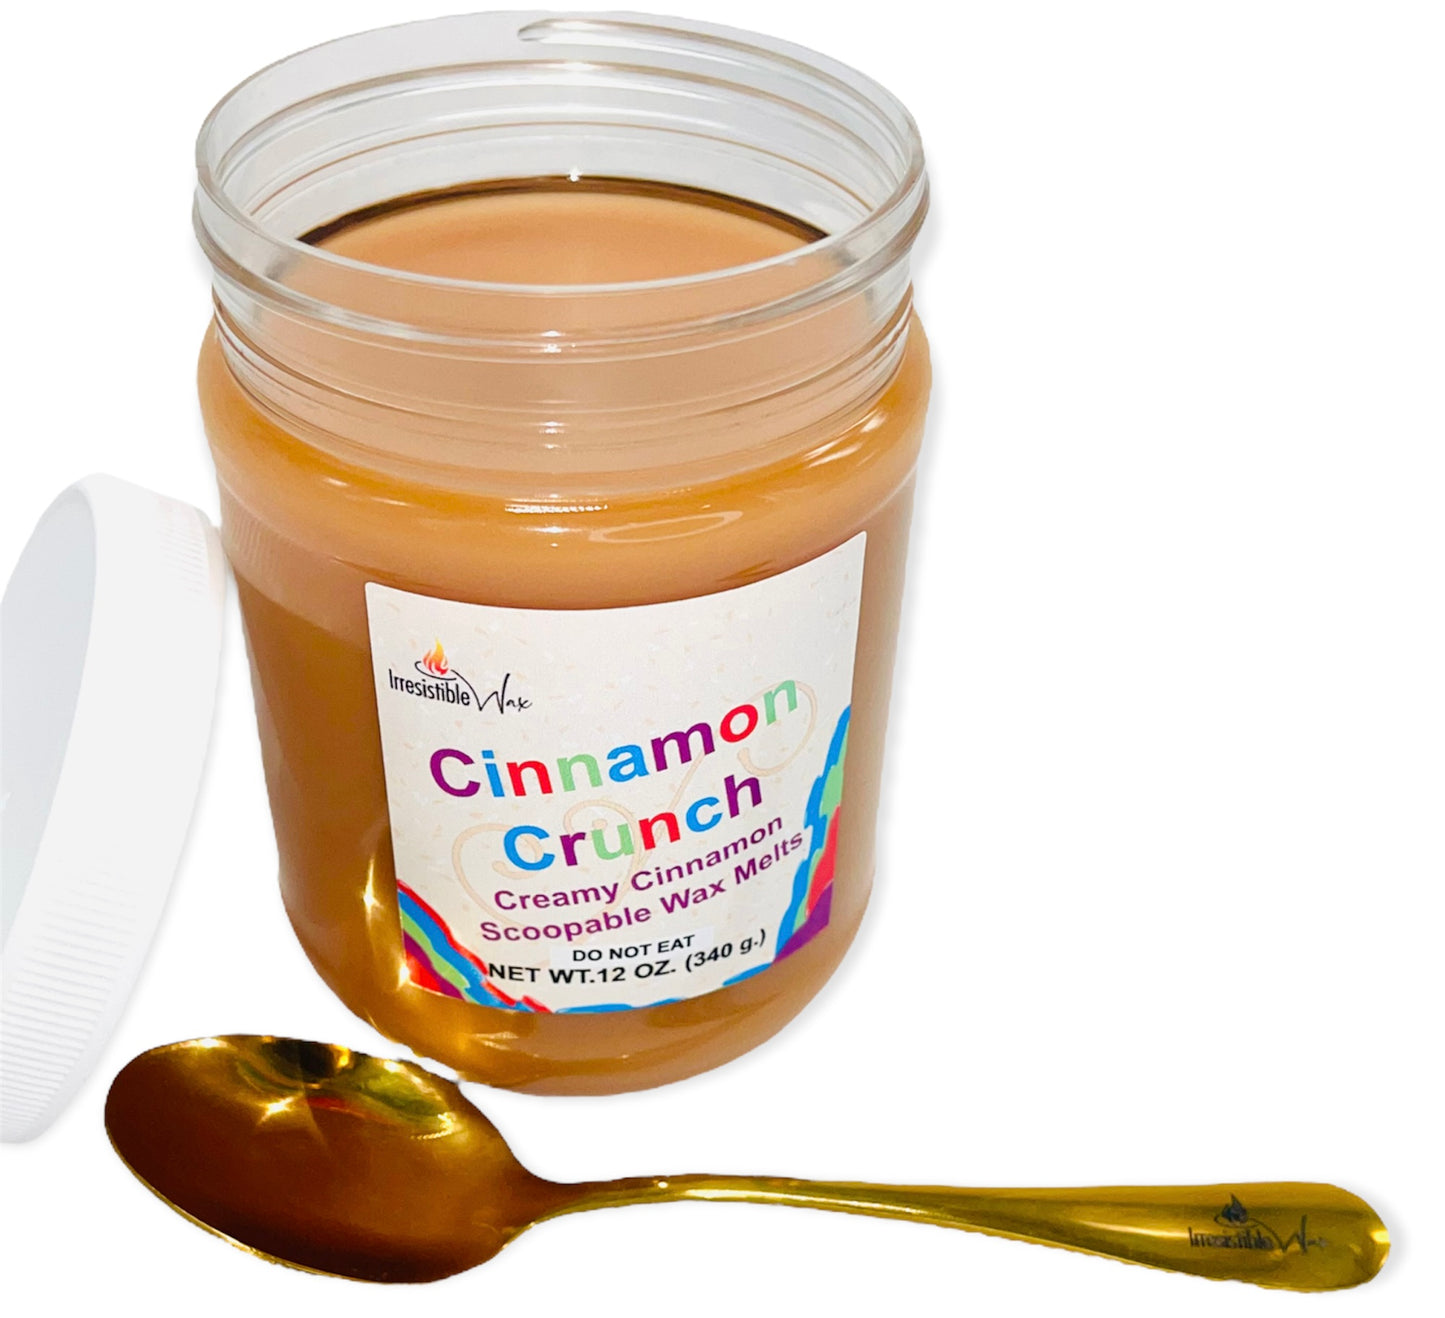 Cinnamon Crunch Spread Scoopable Wax Melts